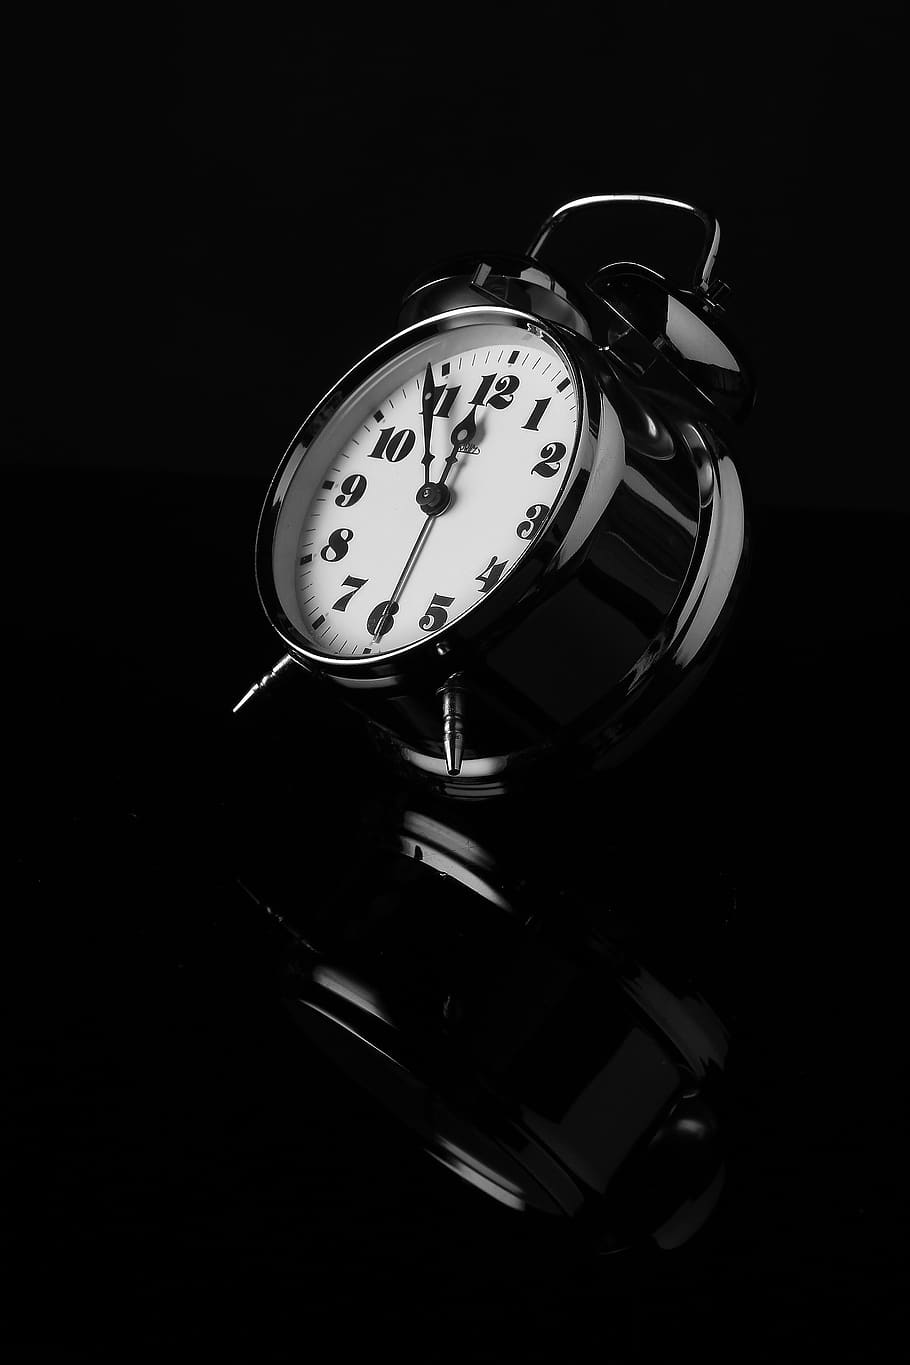 Black Analog Alarm Clock, black-and-white, reflection, time, indoors